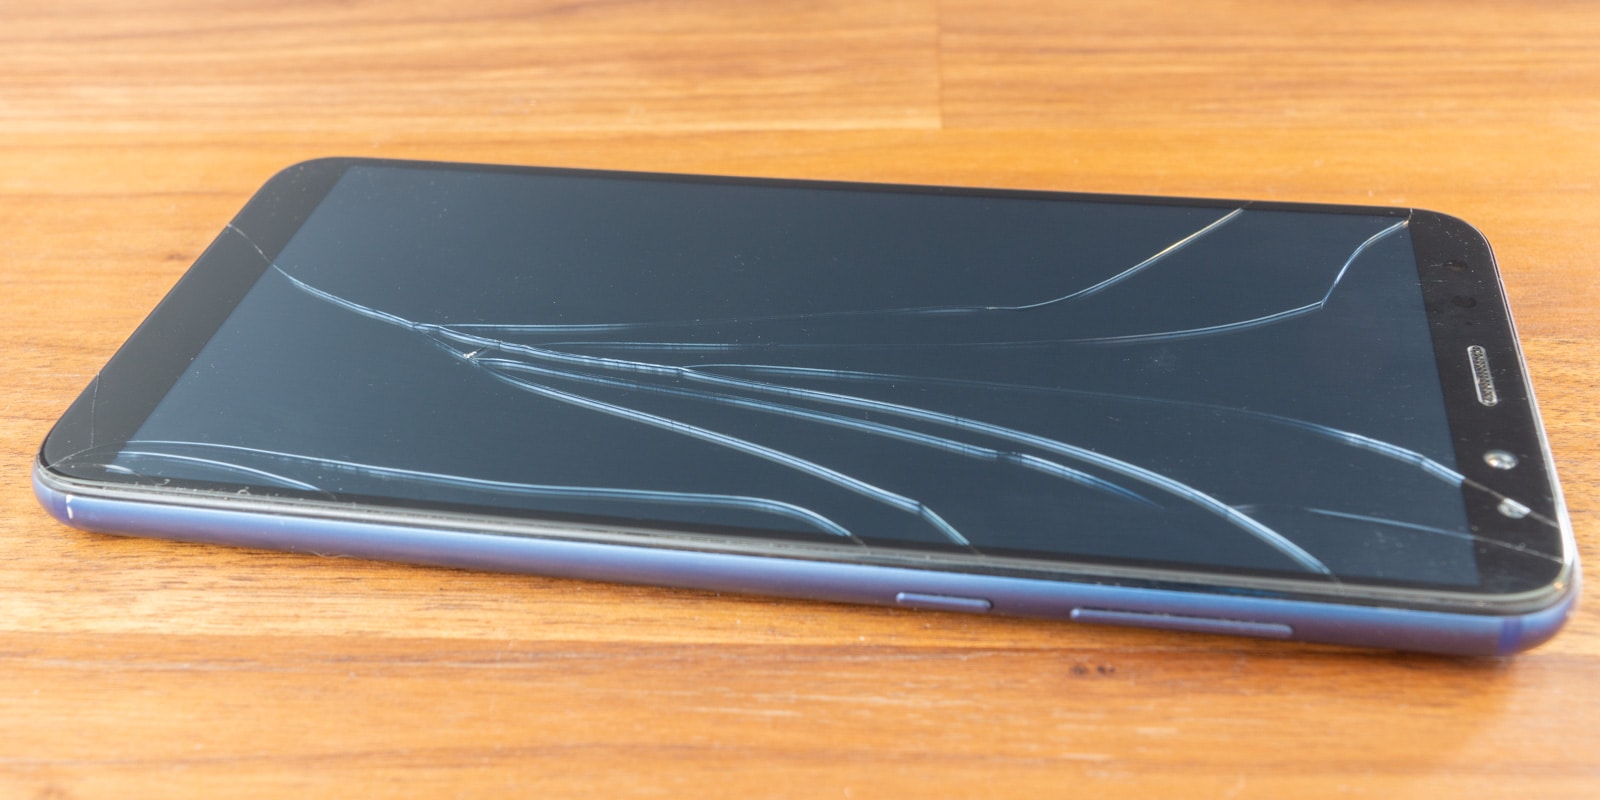 How to Fix a Broken Huawei Mate 10 Lite Phone Screen